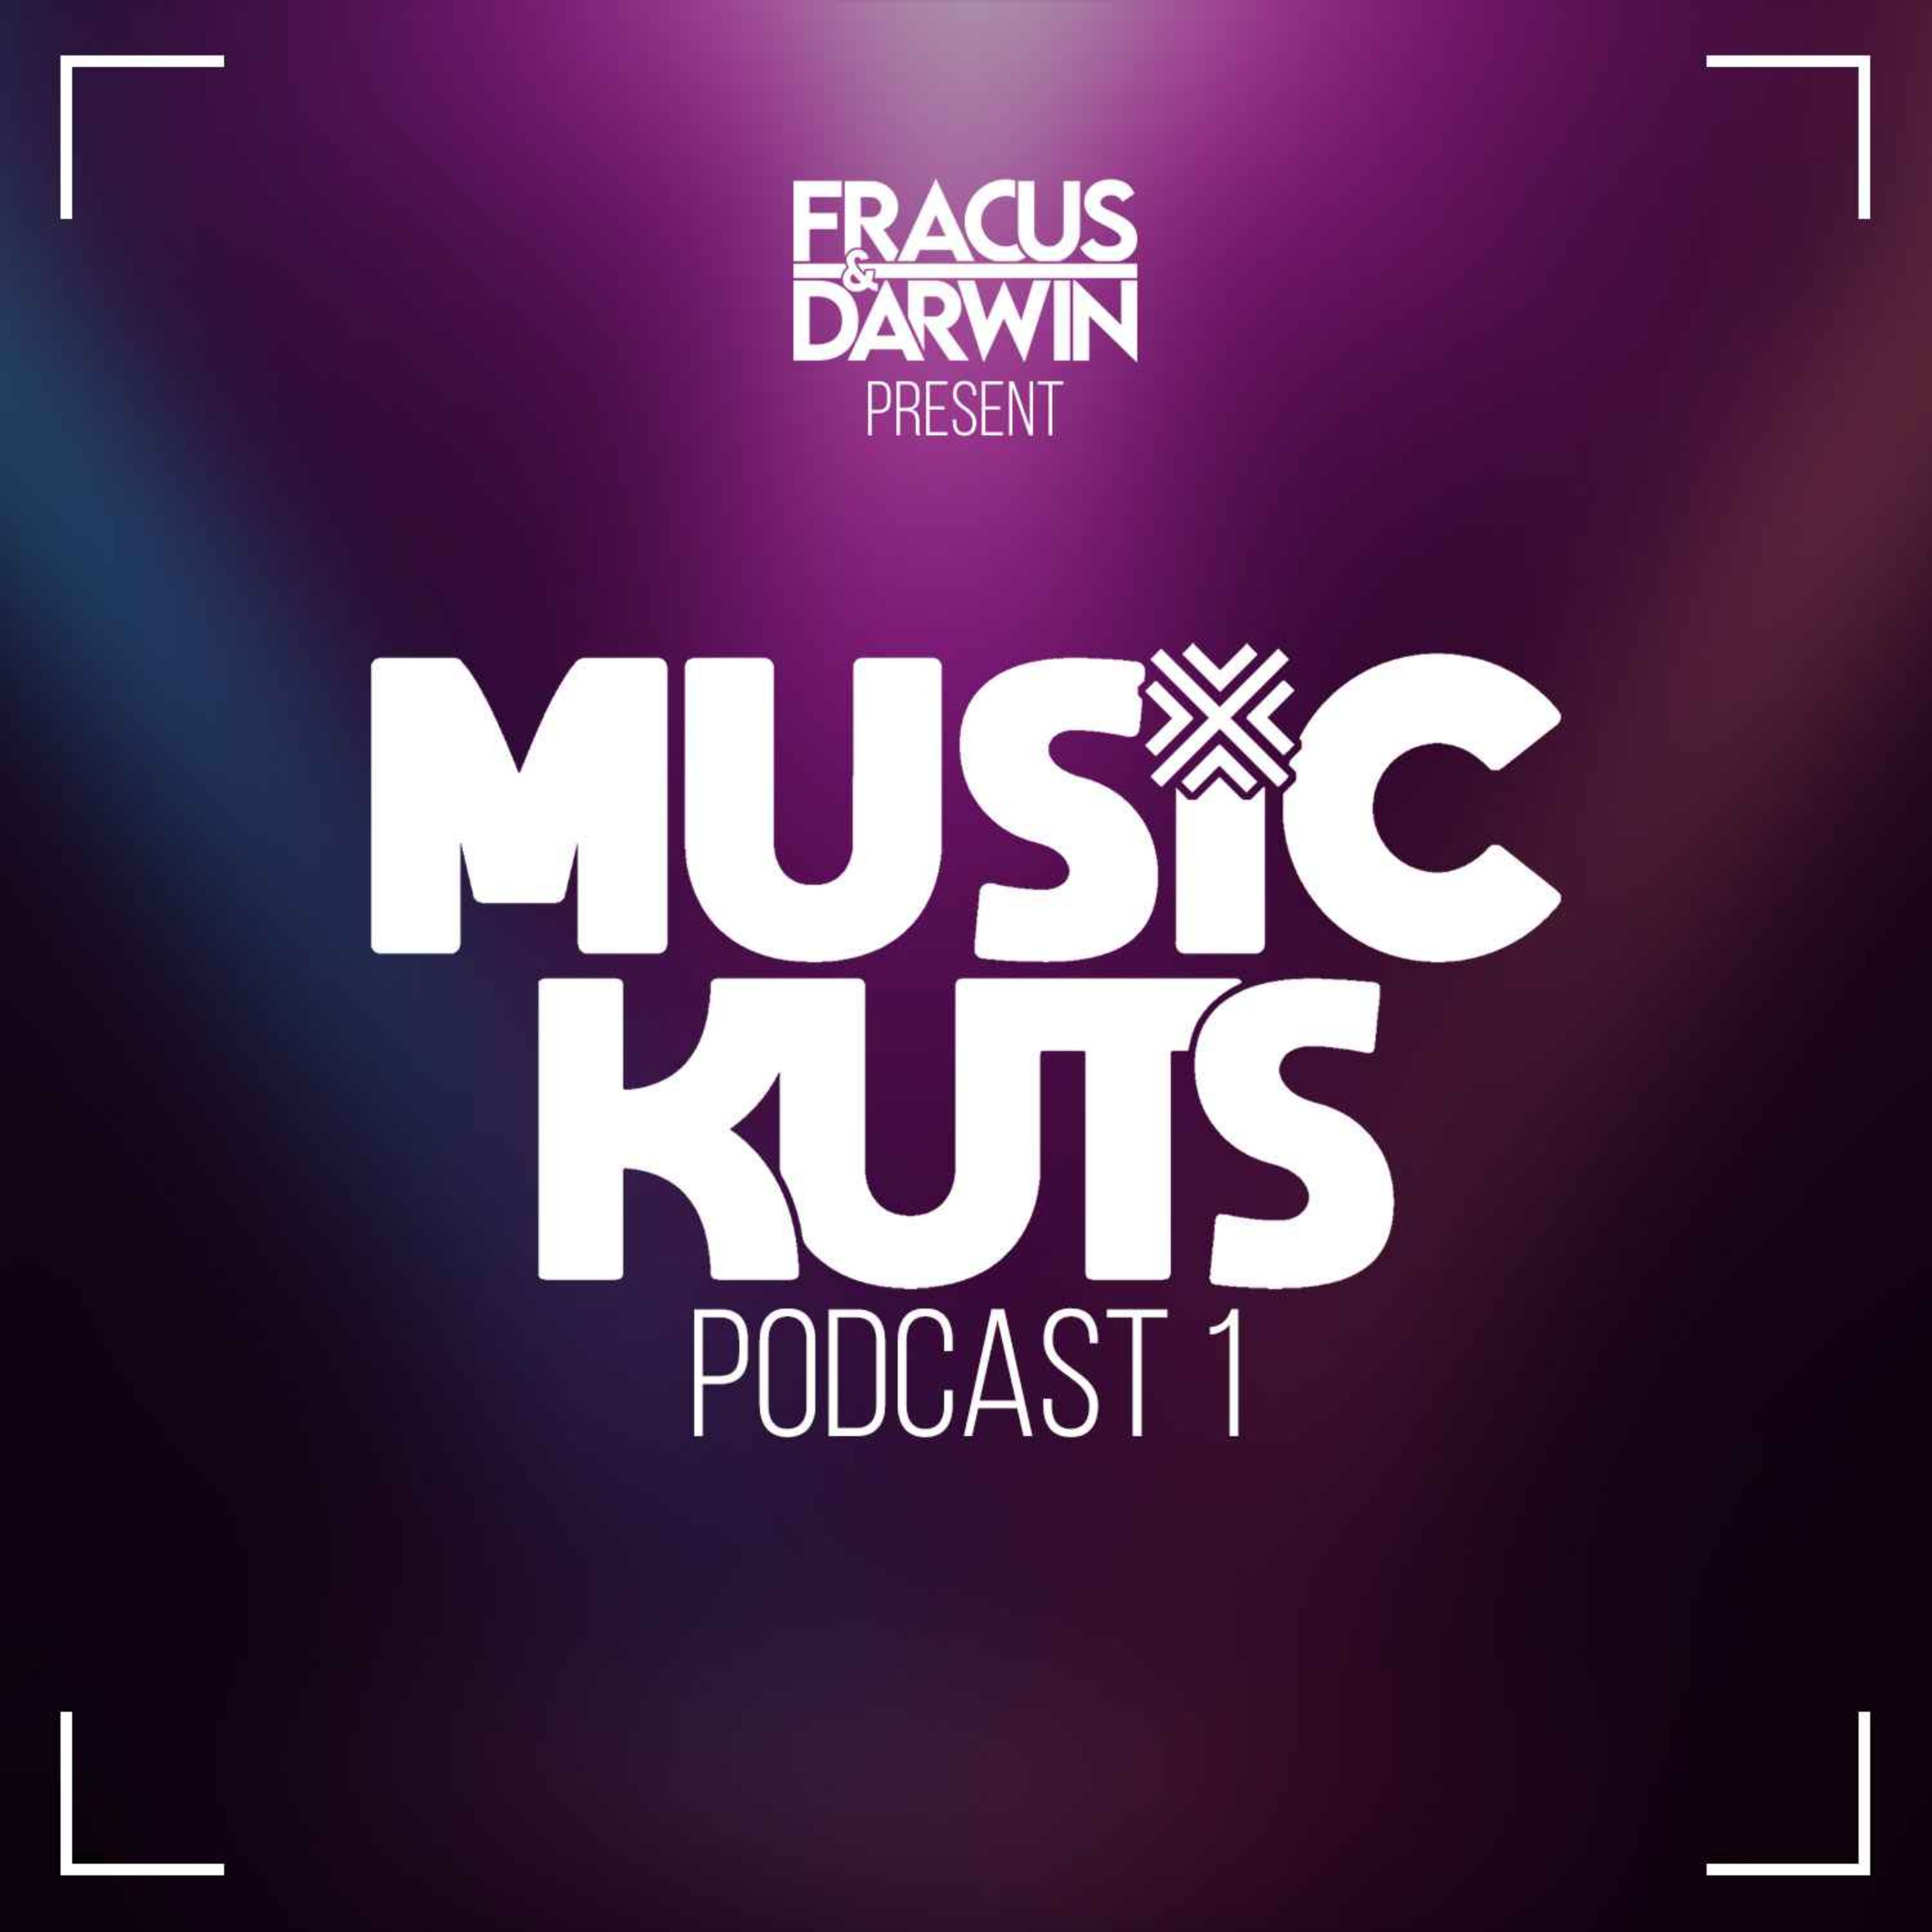 Music Kuts Podcast 1